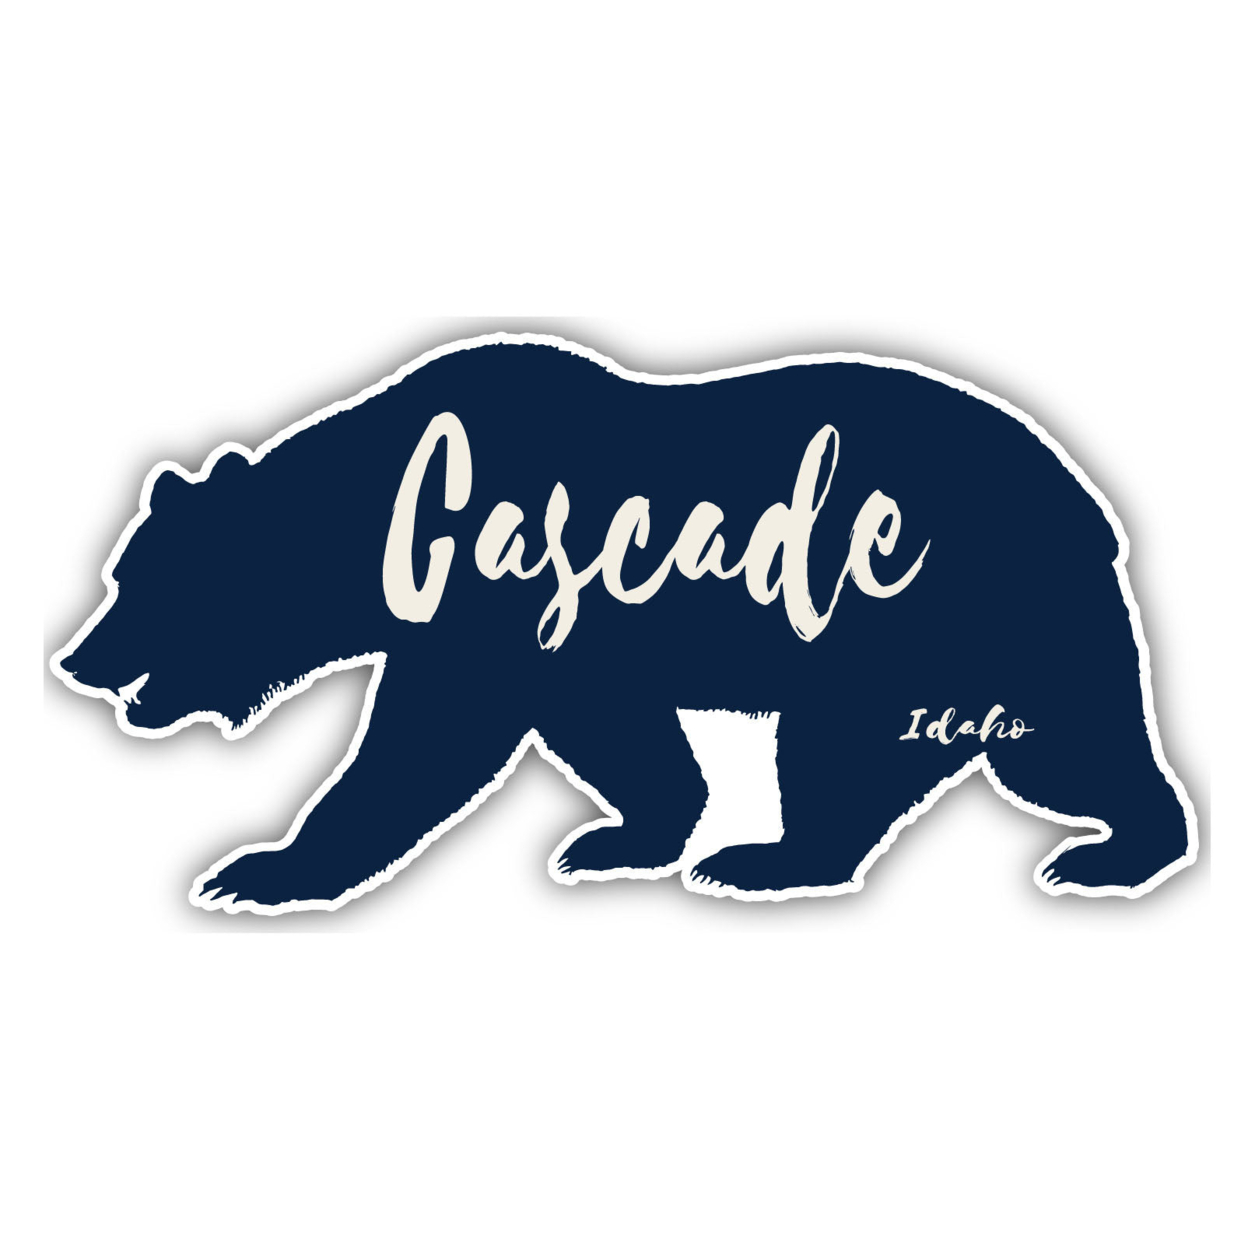 Cascade Idaho Souvenir Decorative Stickers (Choose Theme And Size) - 4-Pack, 4-Inch, Bear